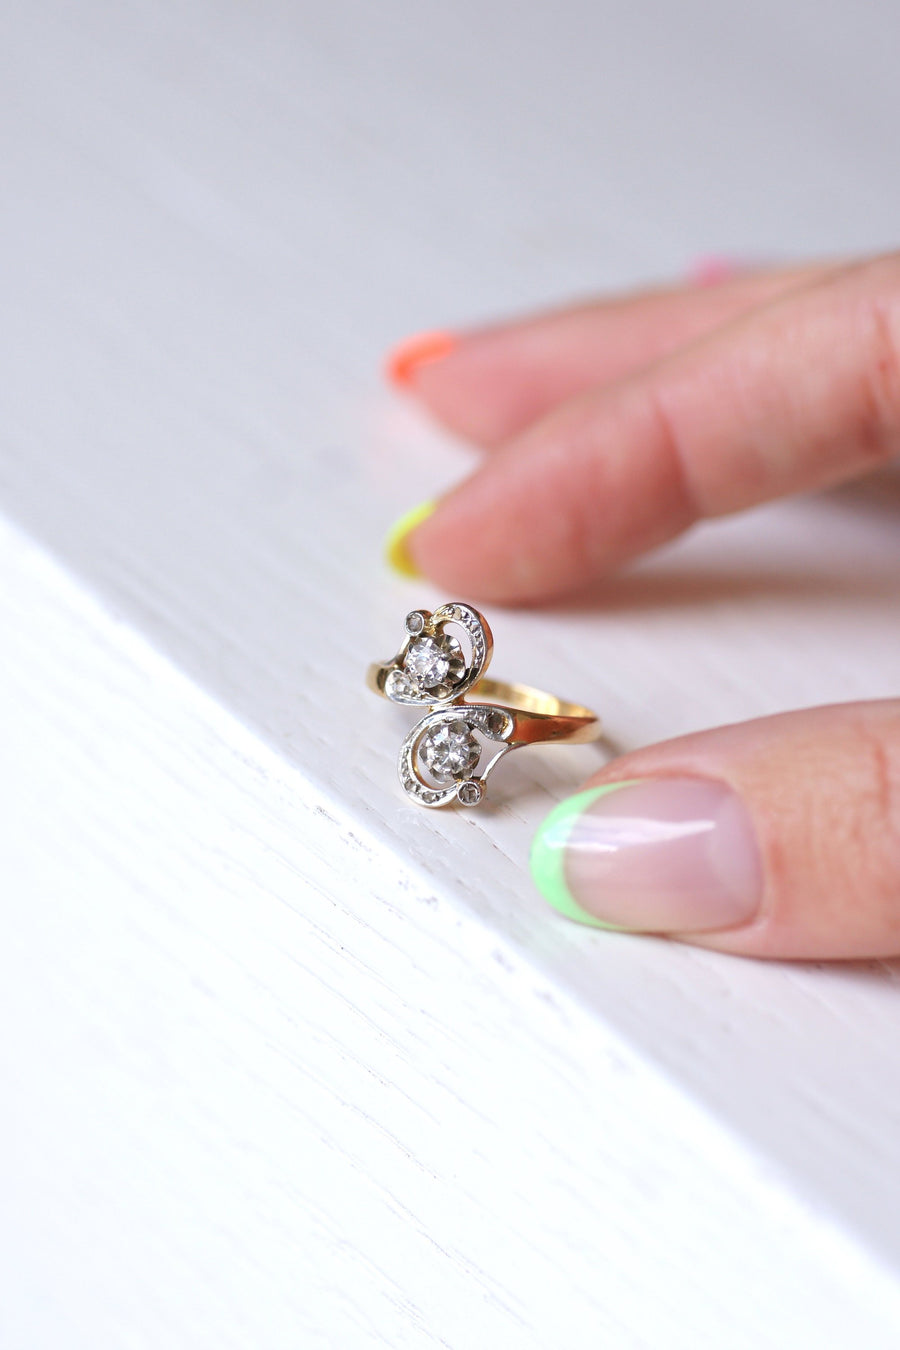 Belle Epoque engagement ring in gold, platinum and diamonds - Galerie Pénélope